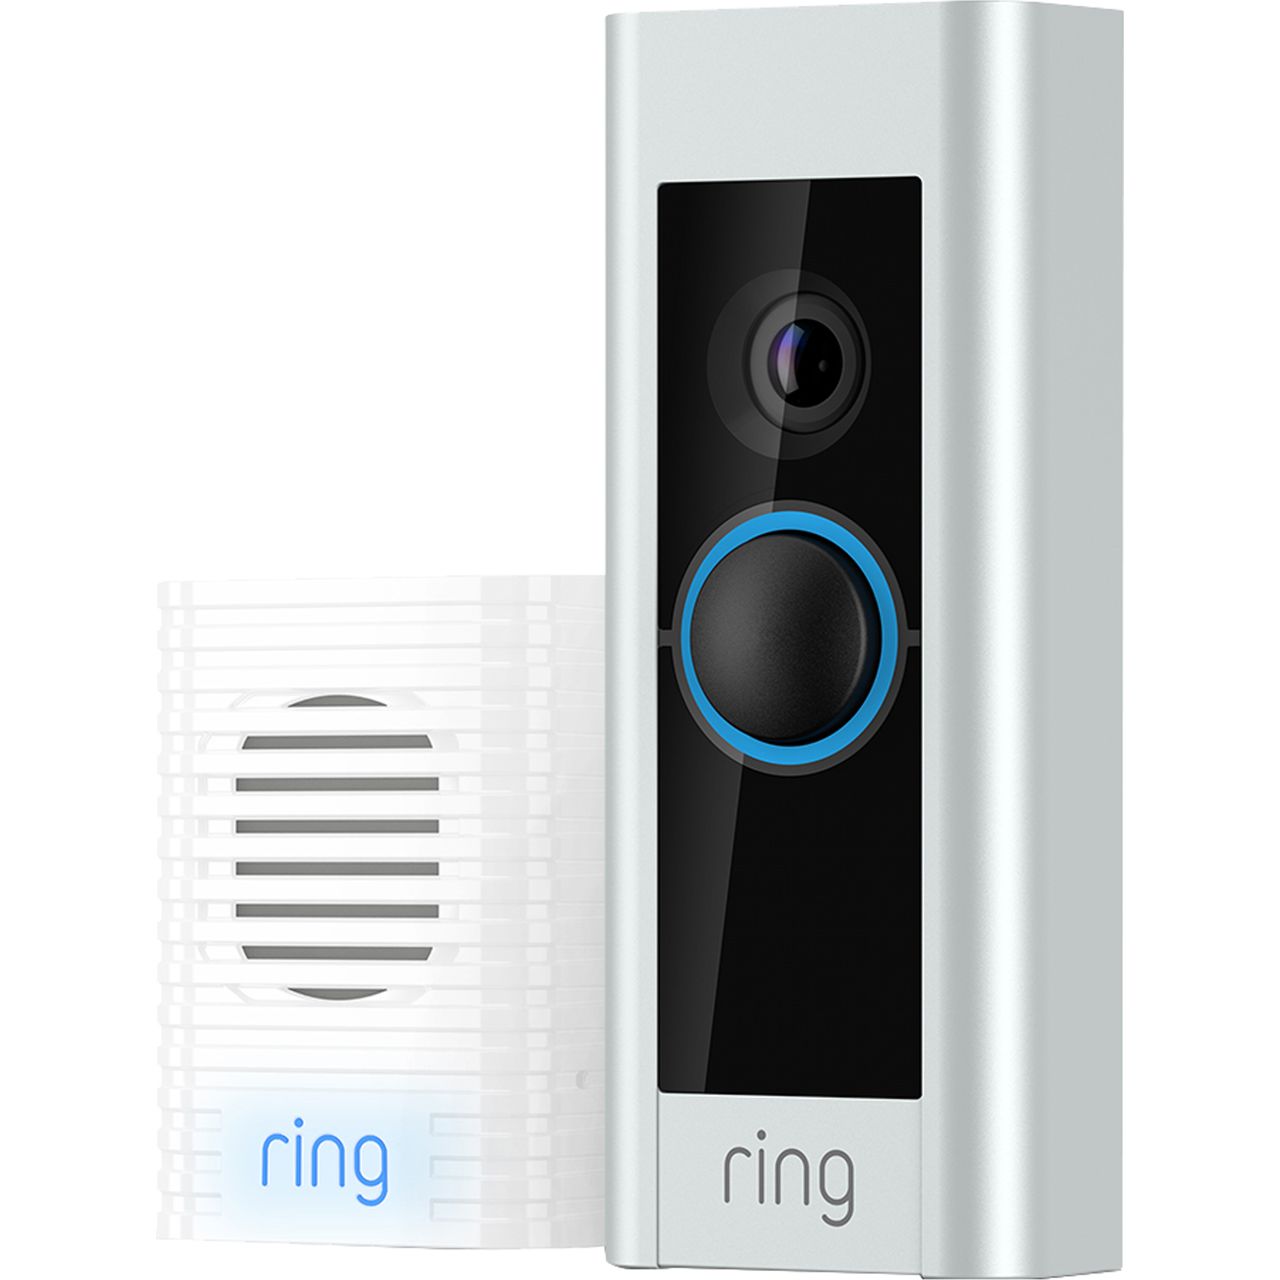 ring hd video doorbell